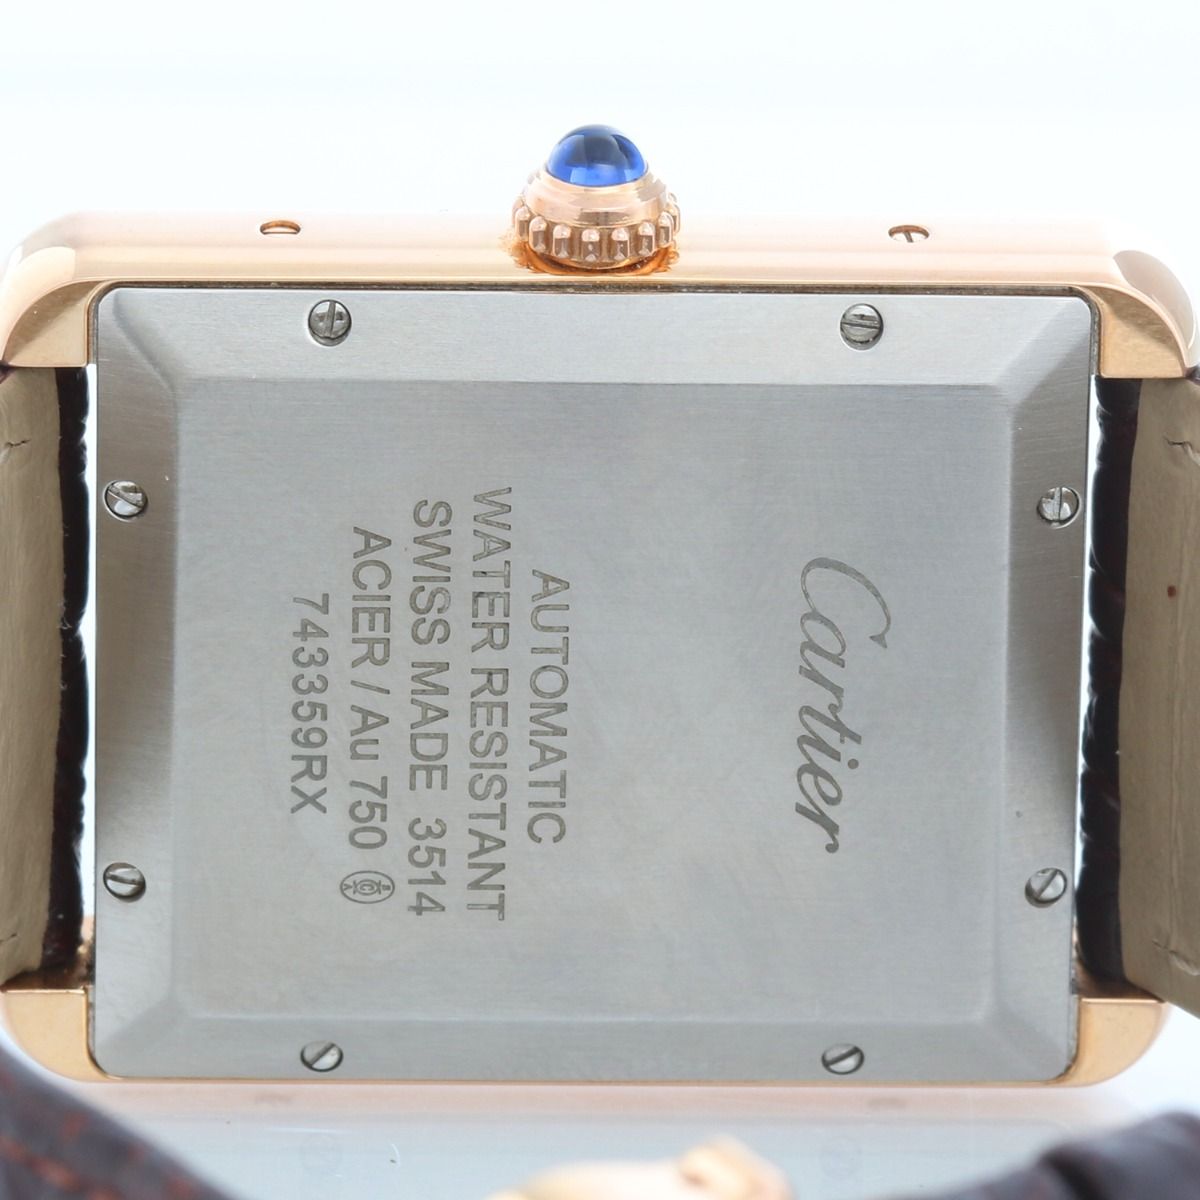 Cartier Tank Solo 18k Rose Gold Watch W5200026 – Dandelion Antiques